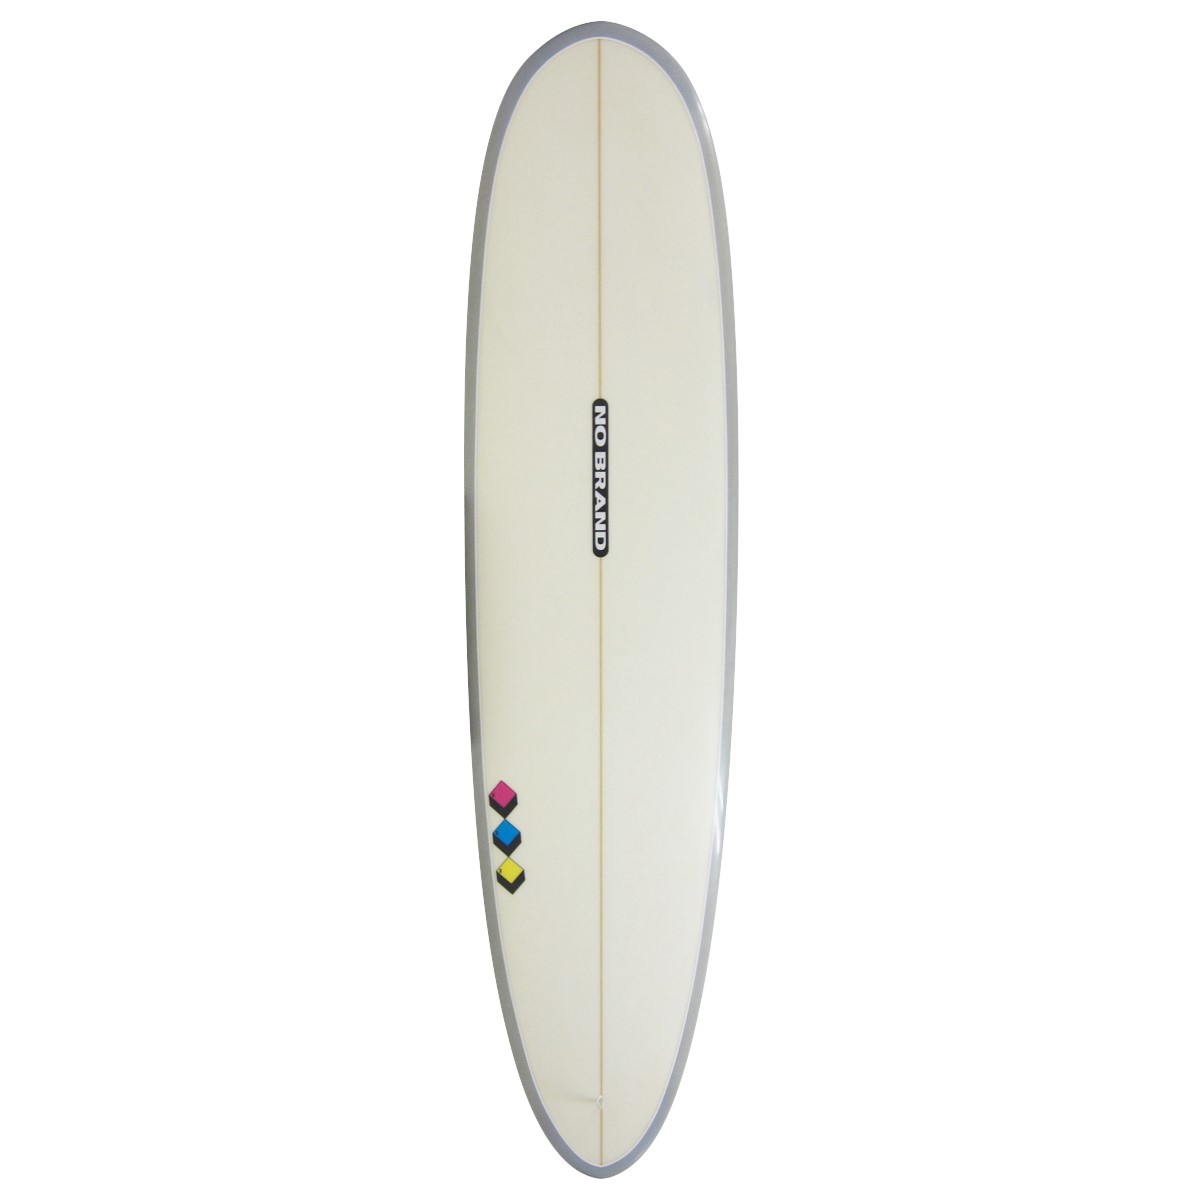 NO BRAND surfboard